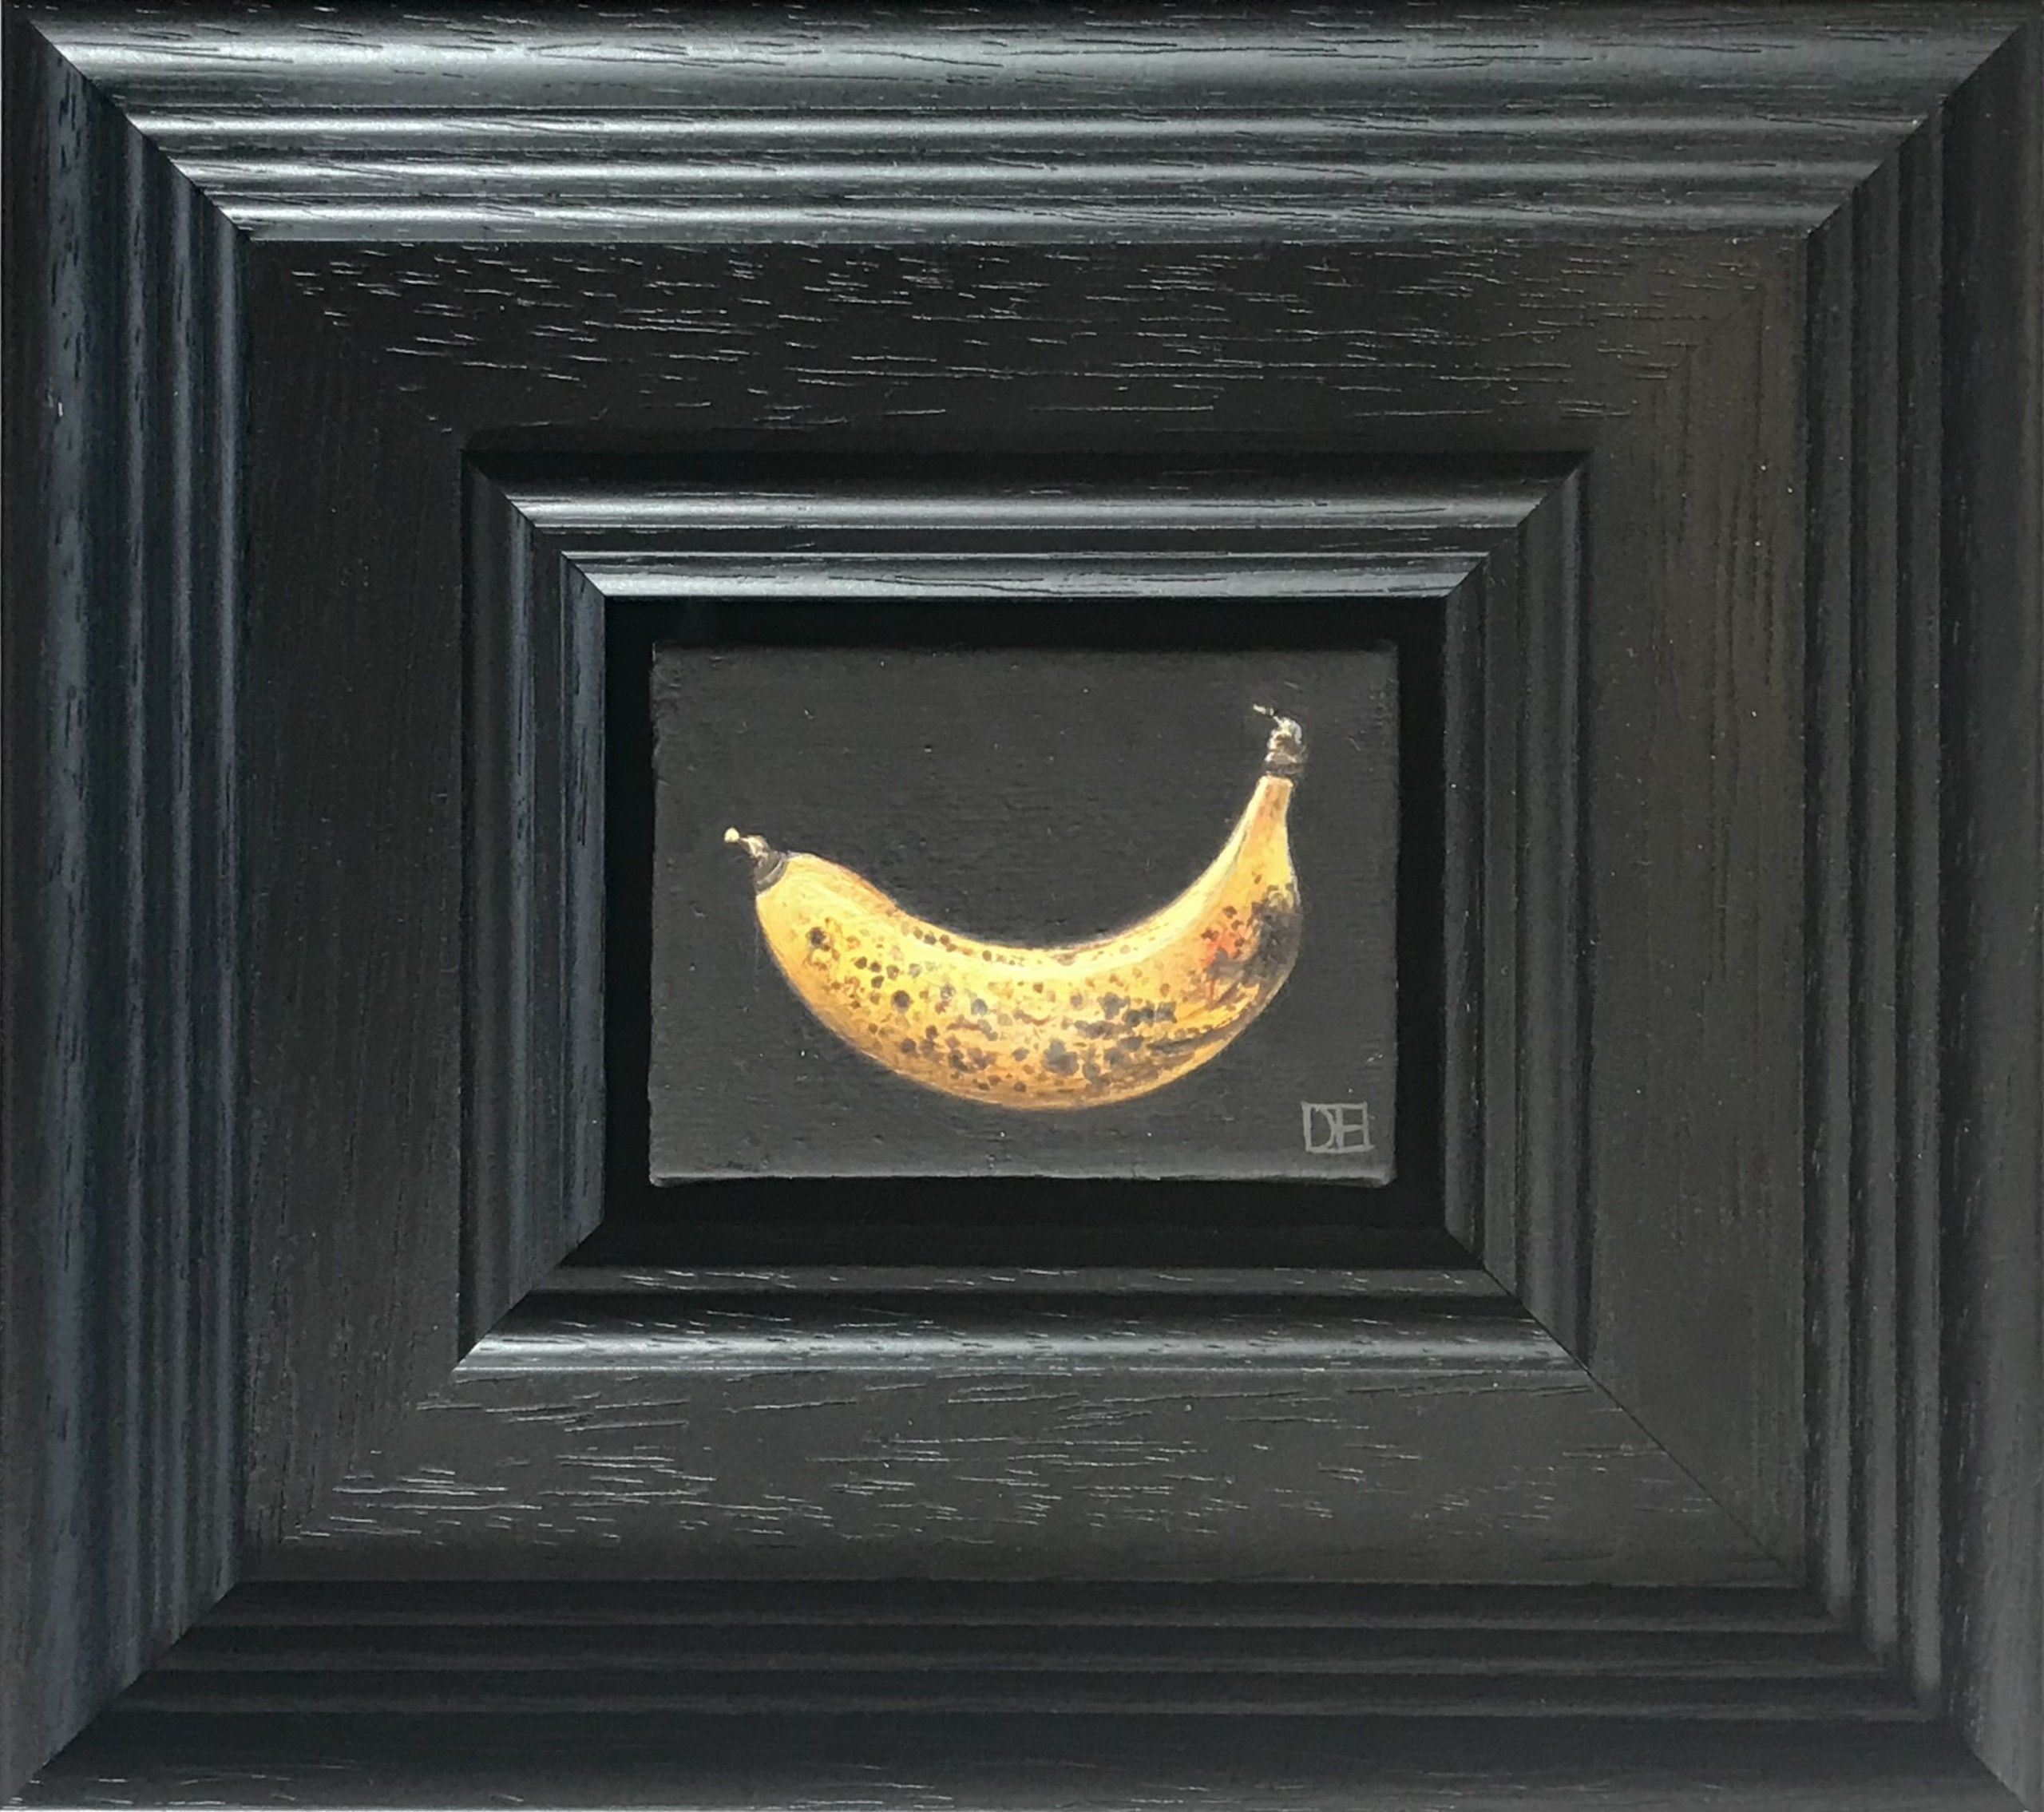 Pocket Banana by Dani Humberstone